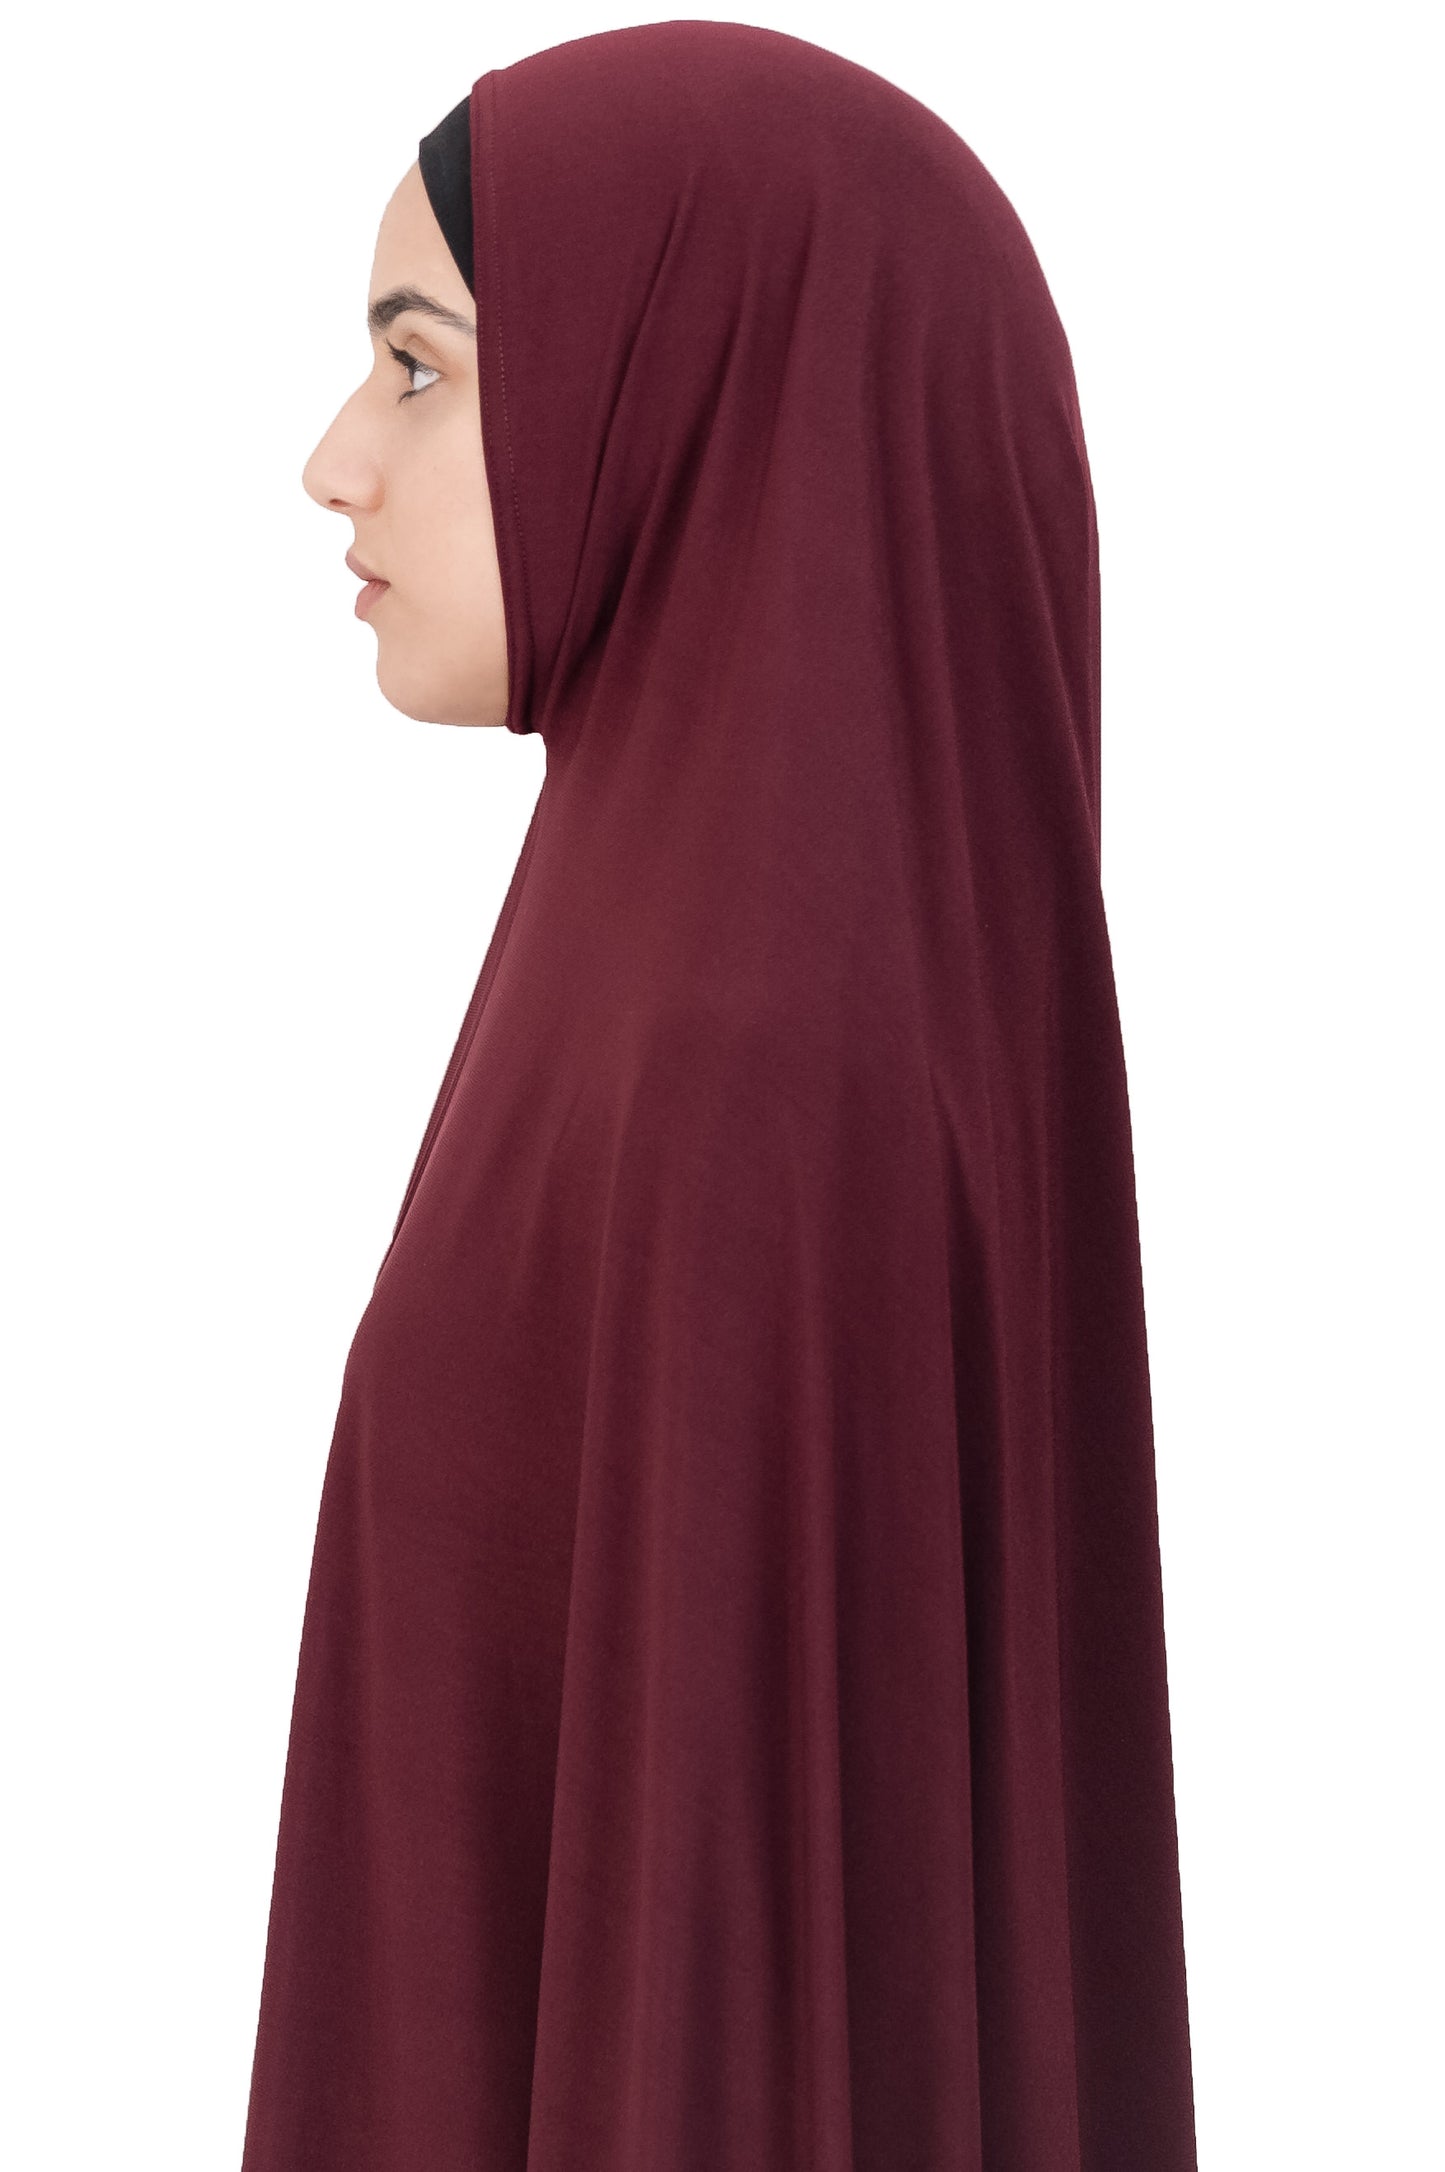 Long Sleeved Jelbab in Maroon